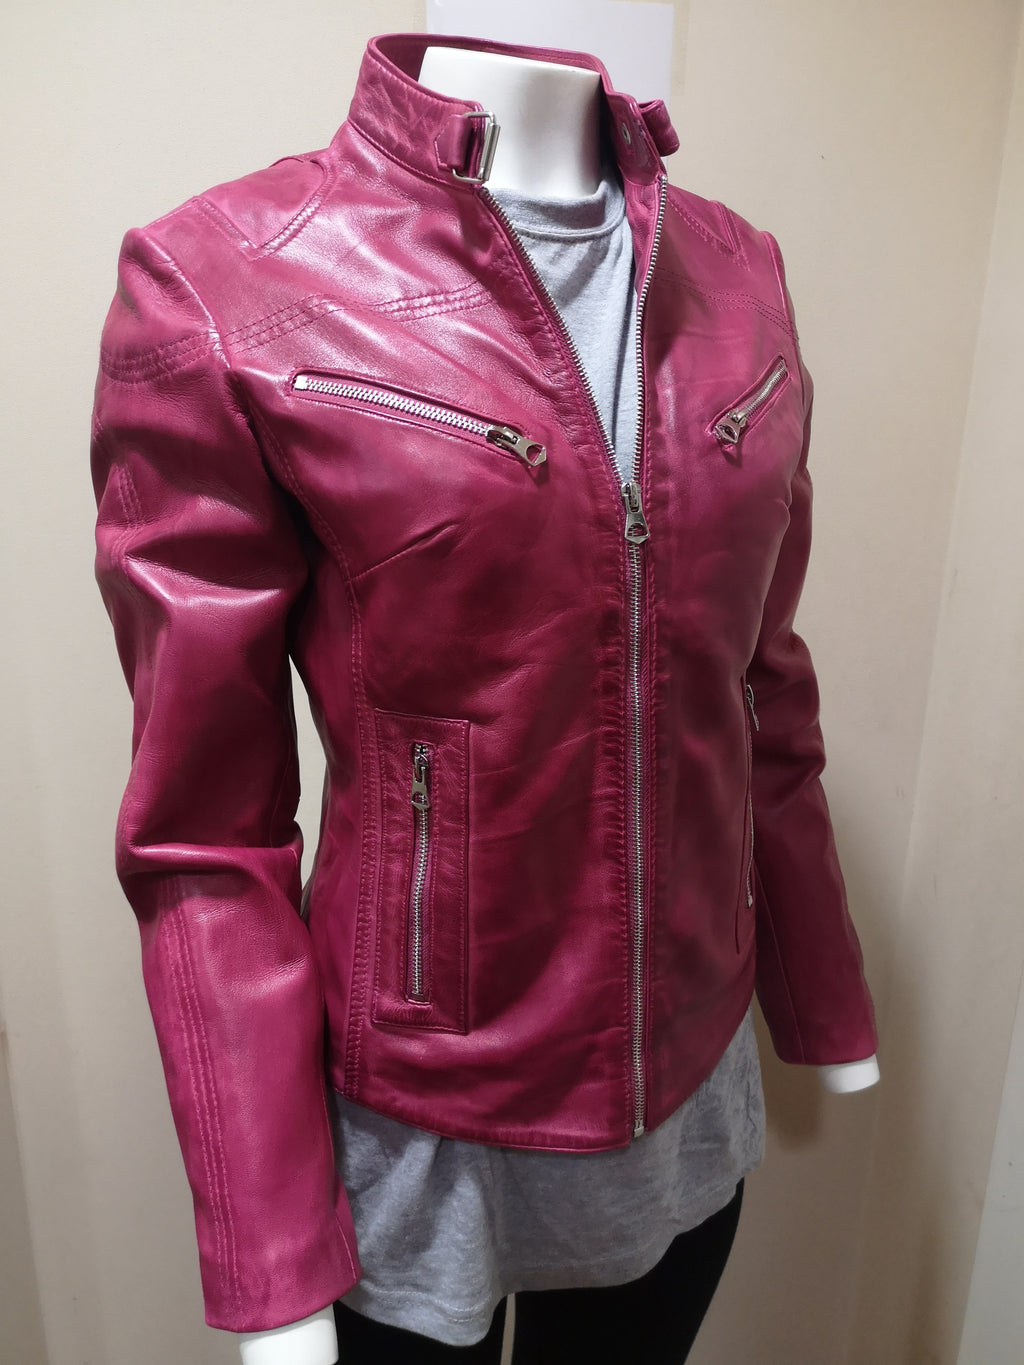 Ladies Antique Tan Slim Fit Biker Style Leather Jacket: Ella